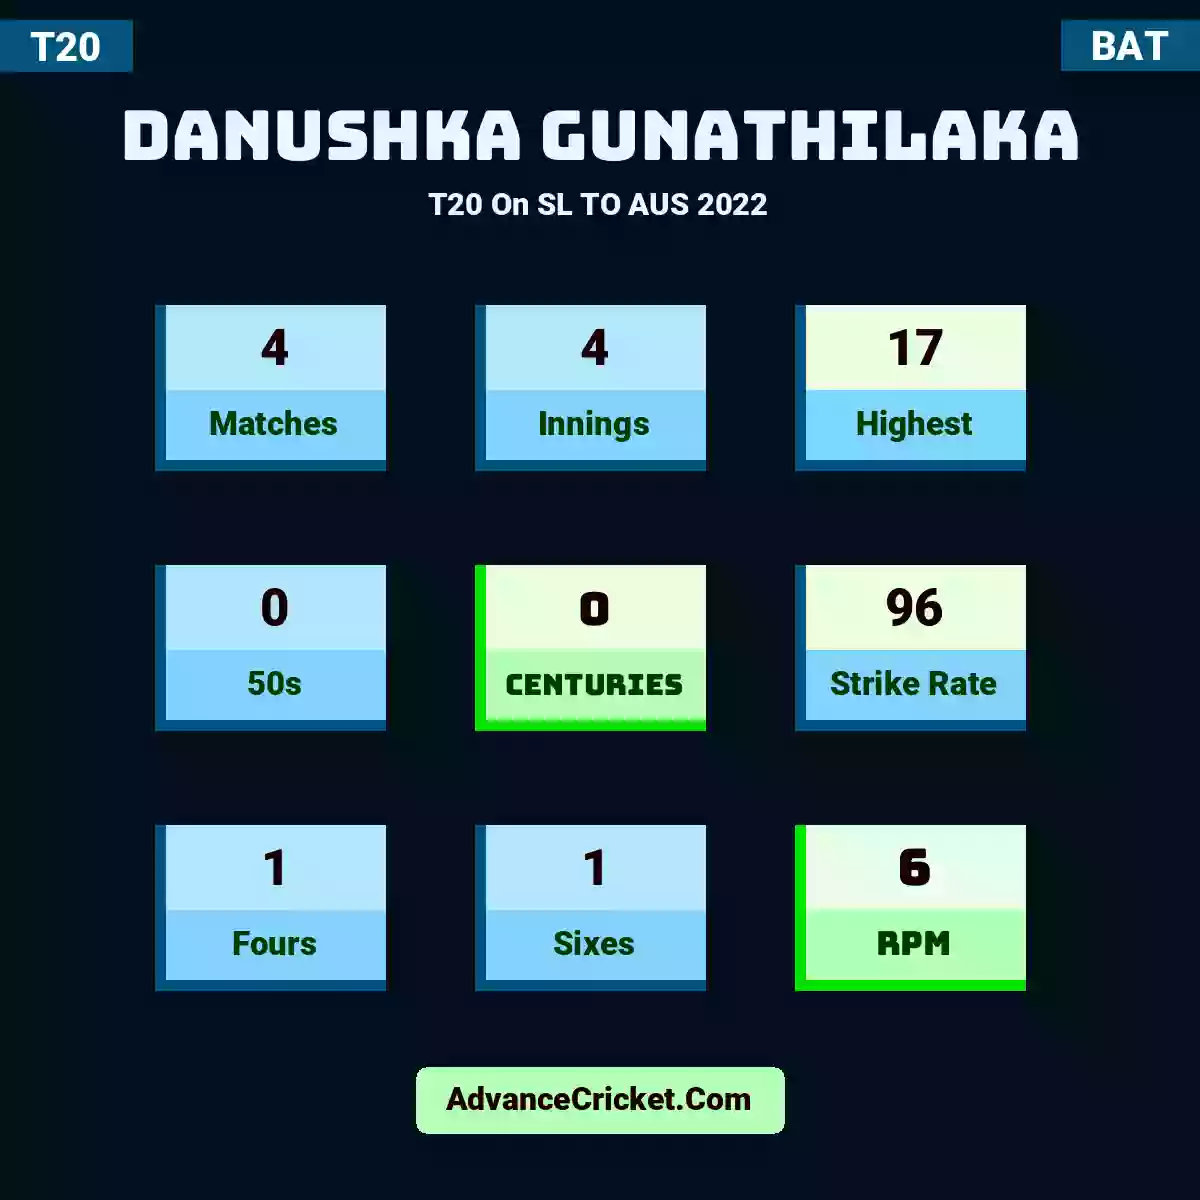 Danushka Gunathilaka T20  On SL TO AUS 2022, Danushka Gunathilaka played 4 matches, scored 17 runs as highest, 0 half-centuries, and 0 centuries, with a strike rate of 96. D.Gunathilaka hit 1 fours and 1 sixes, with an RPM of 6.